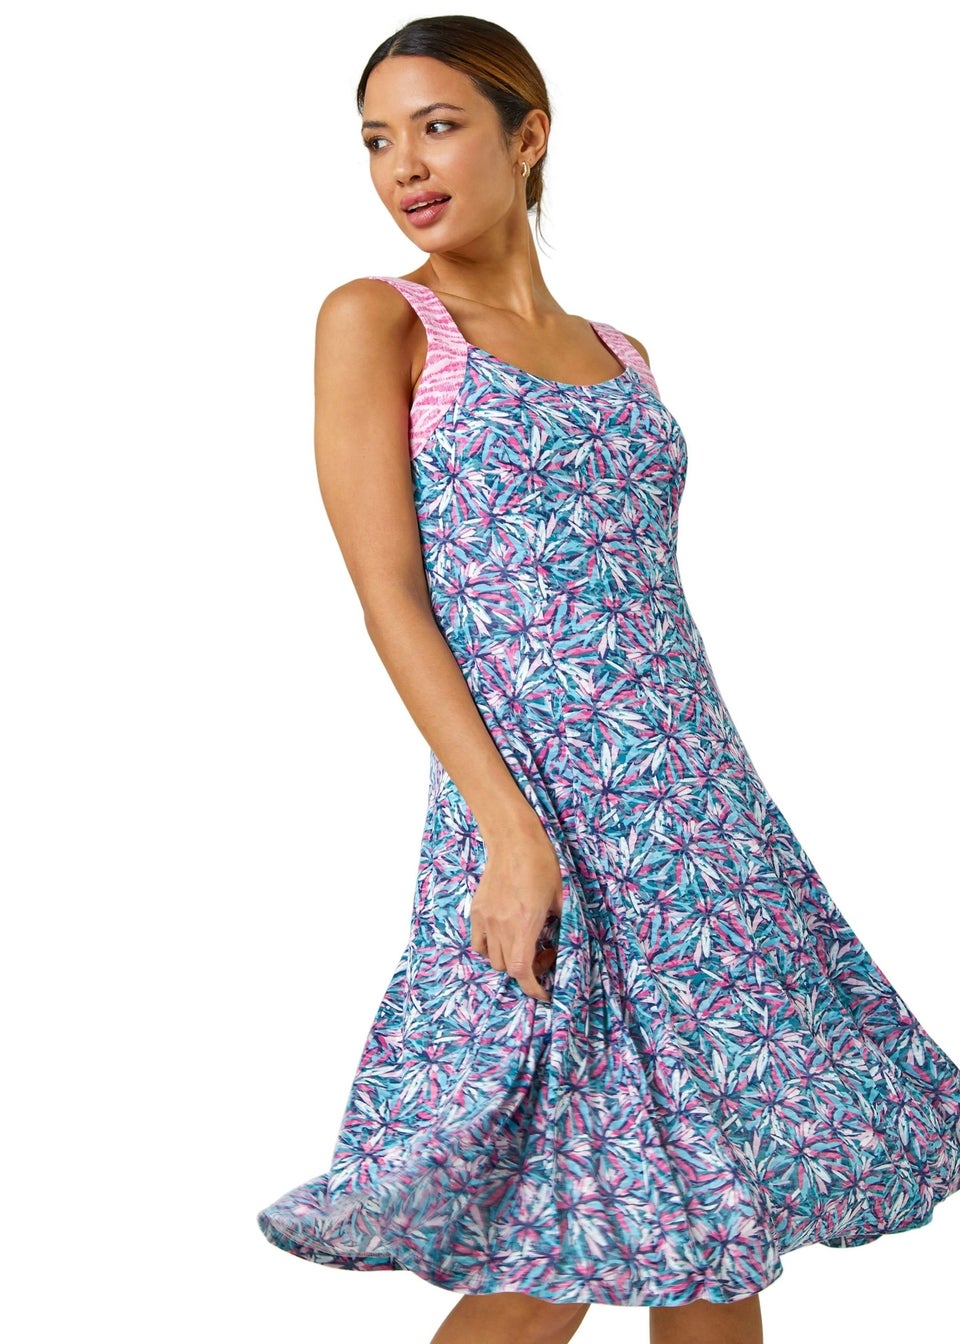 Roman Pink Sleeveless Contrast Floral Print Dress